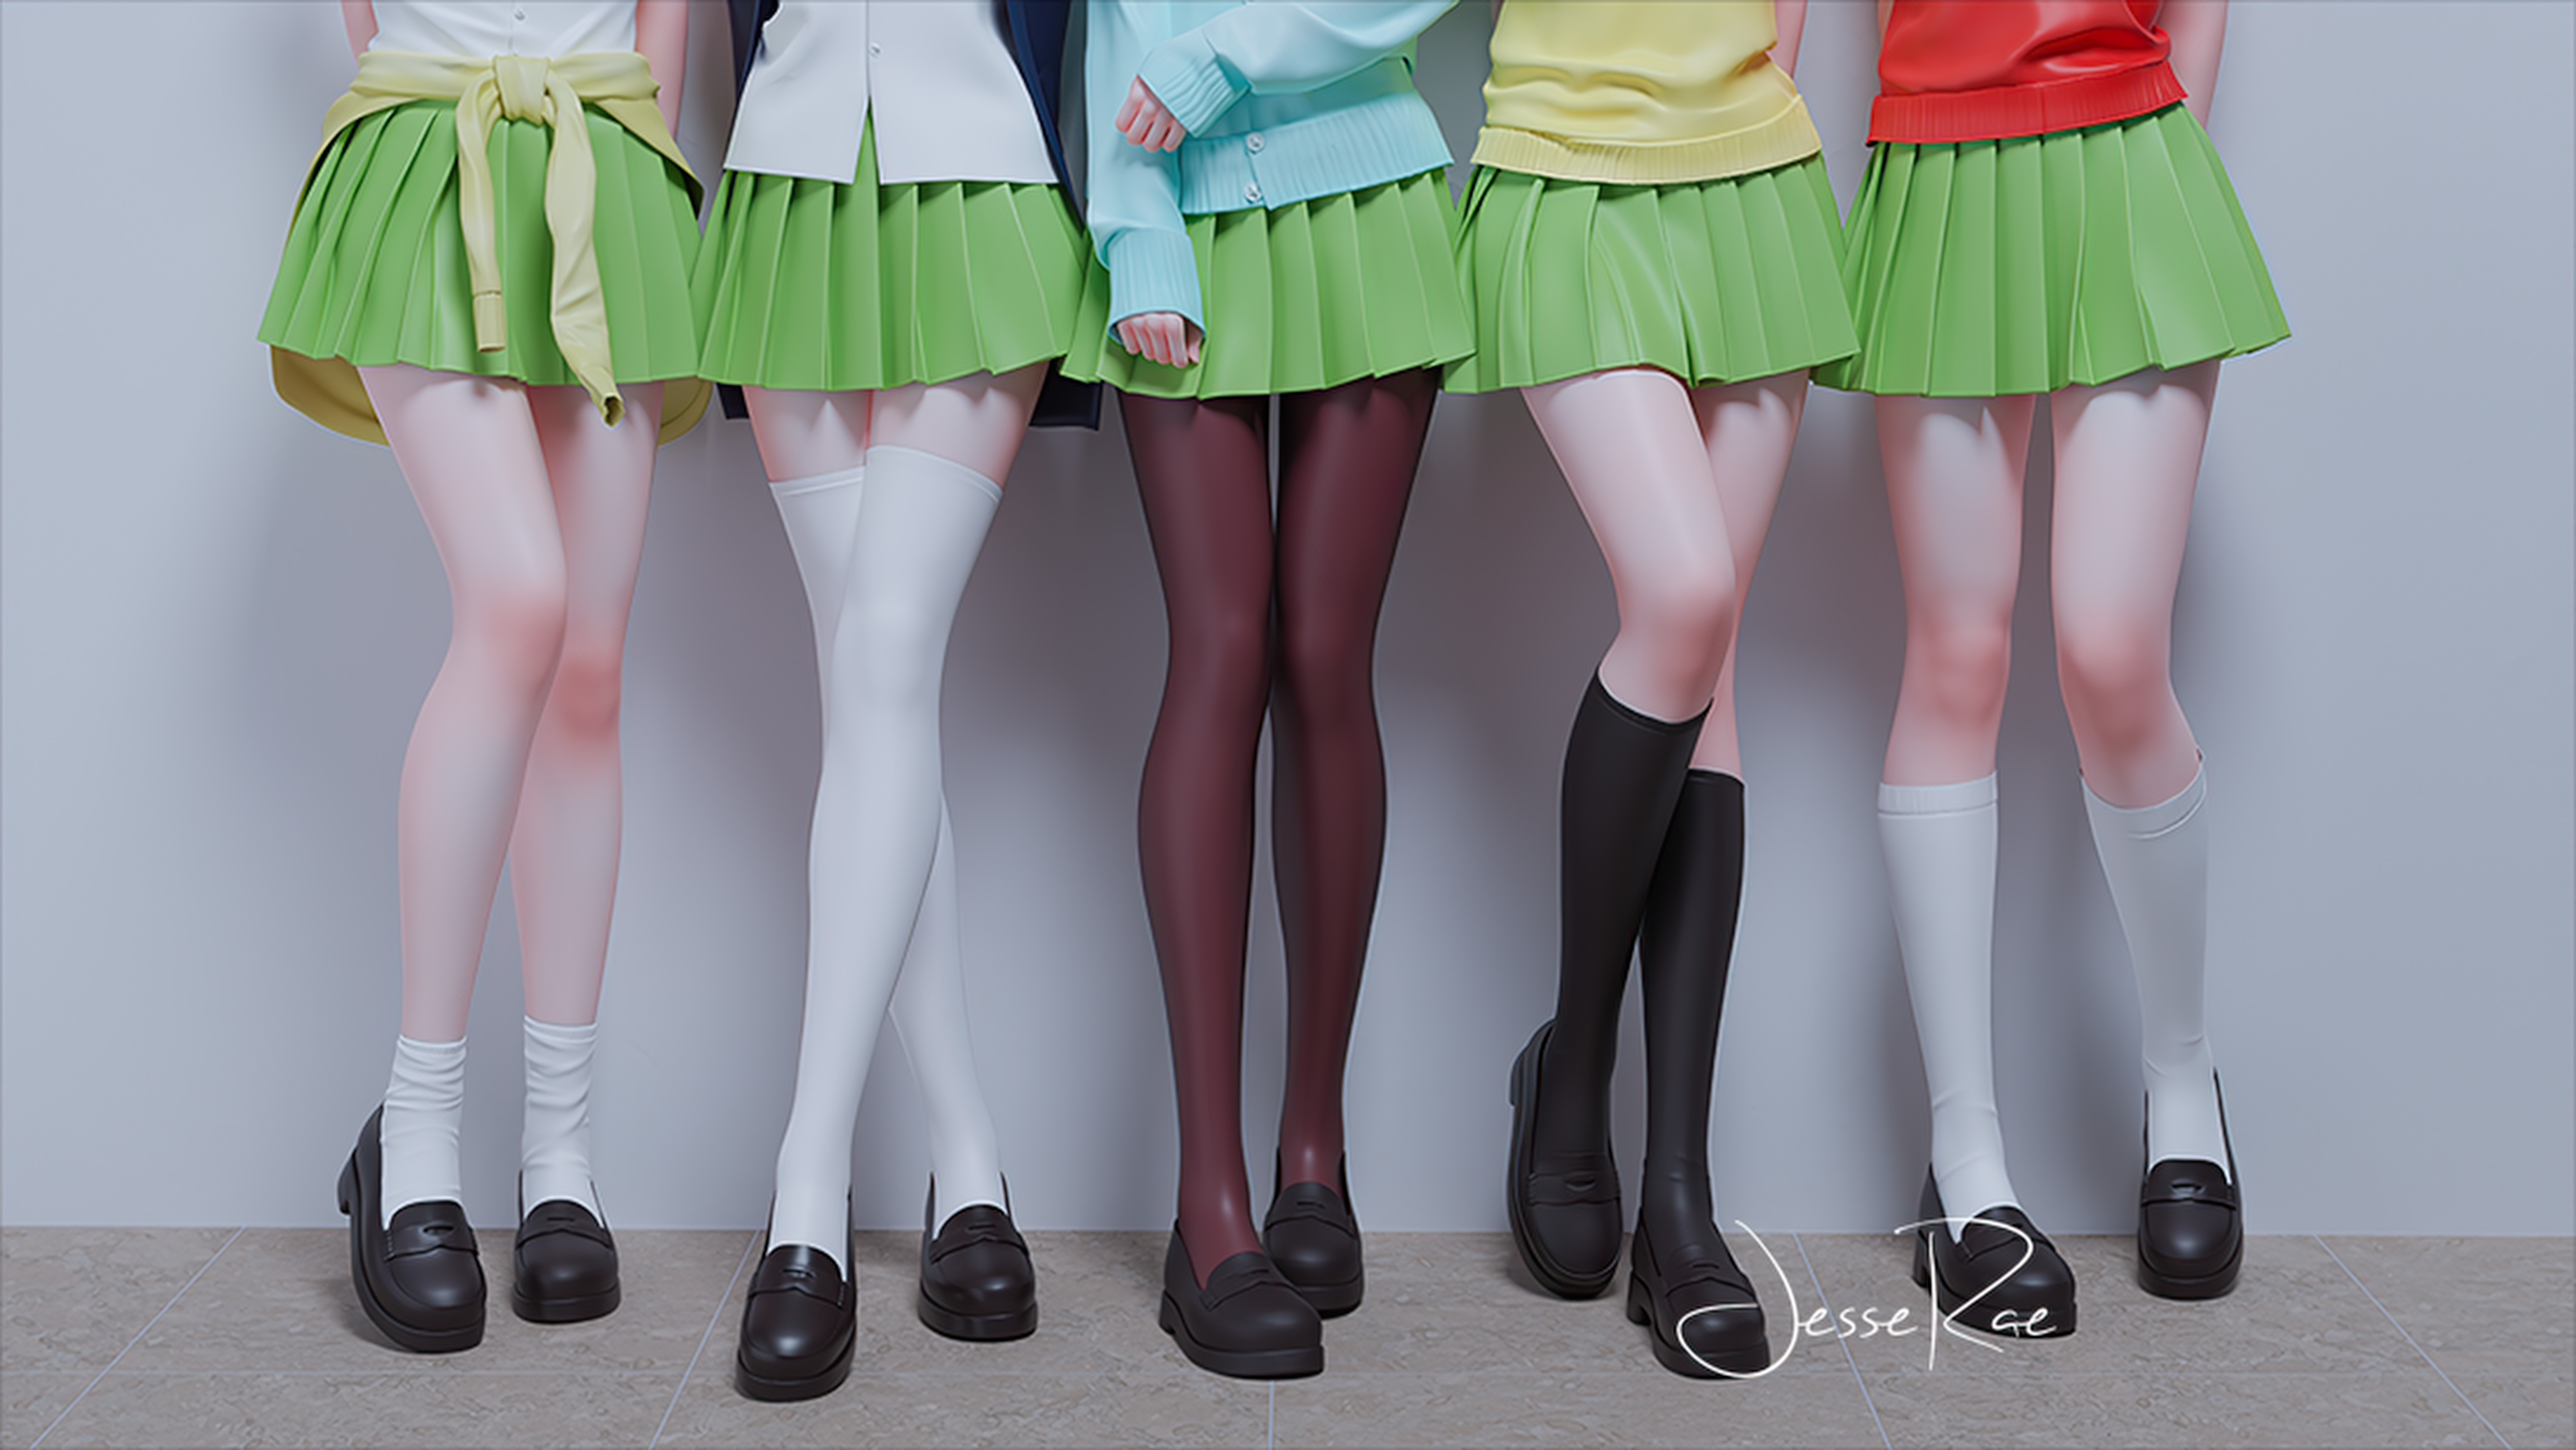 Legs Skirt Anime Girls 5 Toubun No Hanayome Jesse Rae 6824x3840